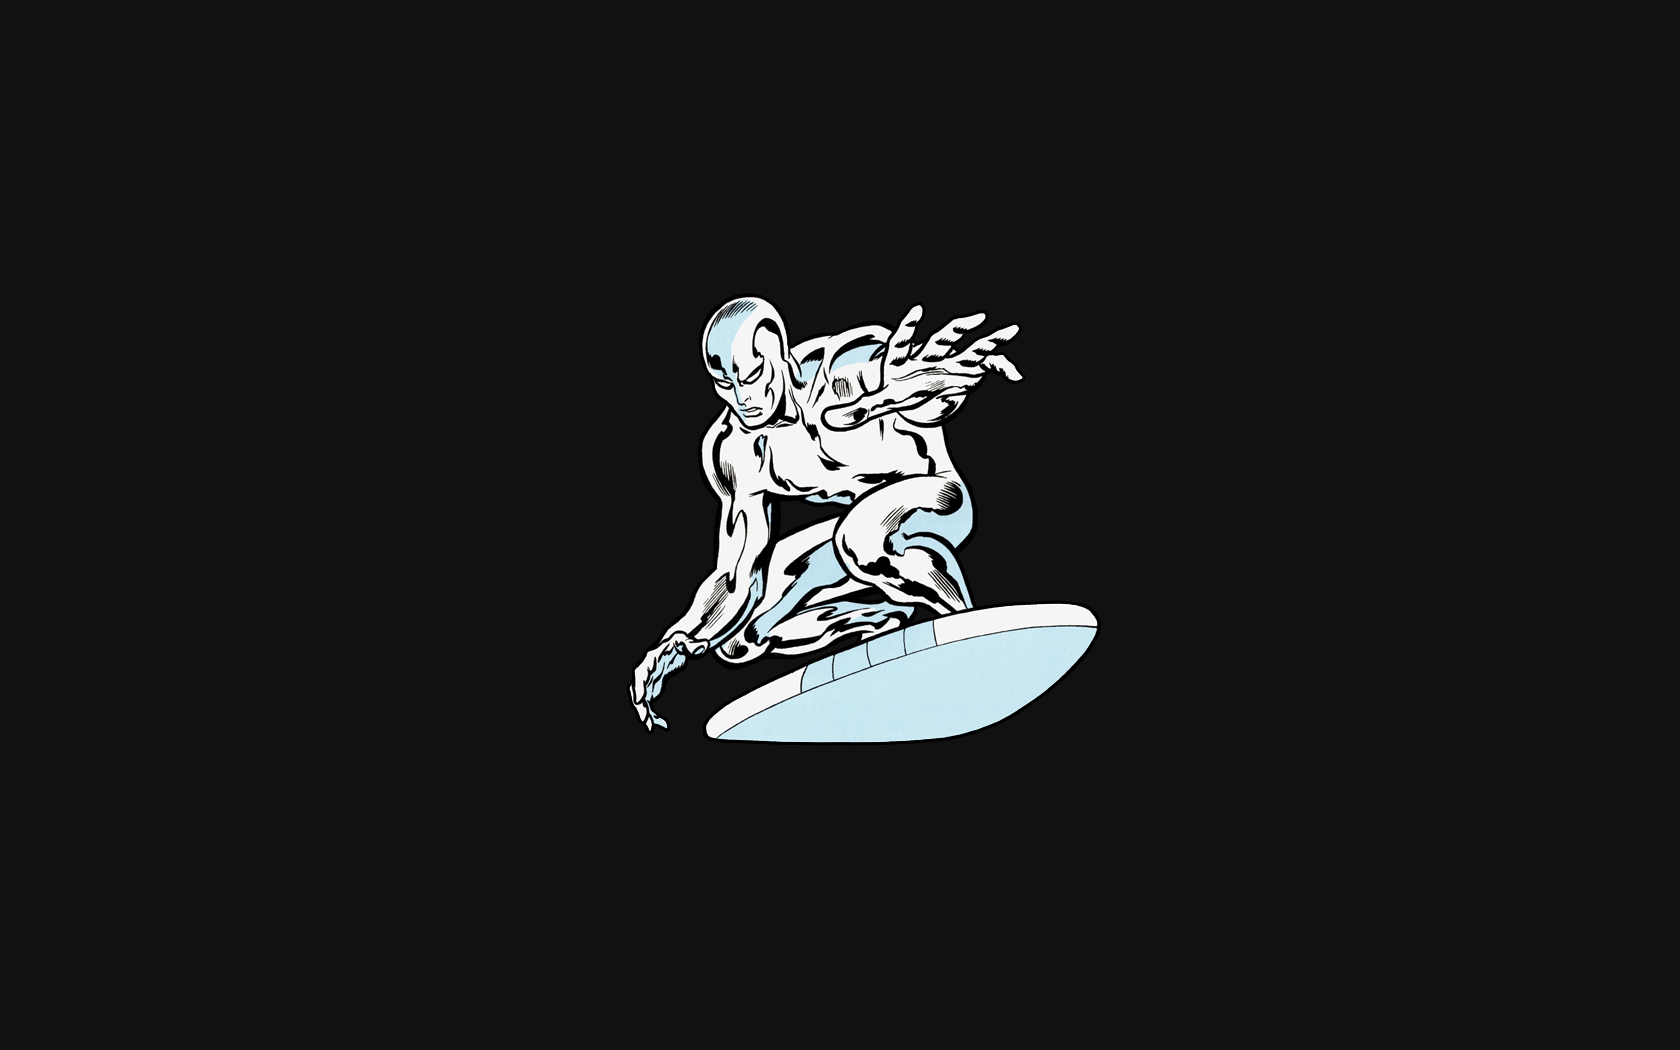 Silver Surfer wallpaper. Silver Surfer background